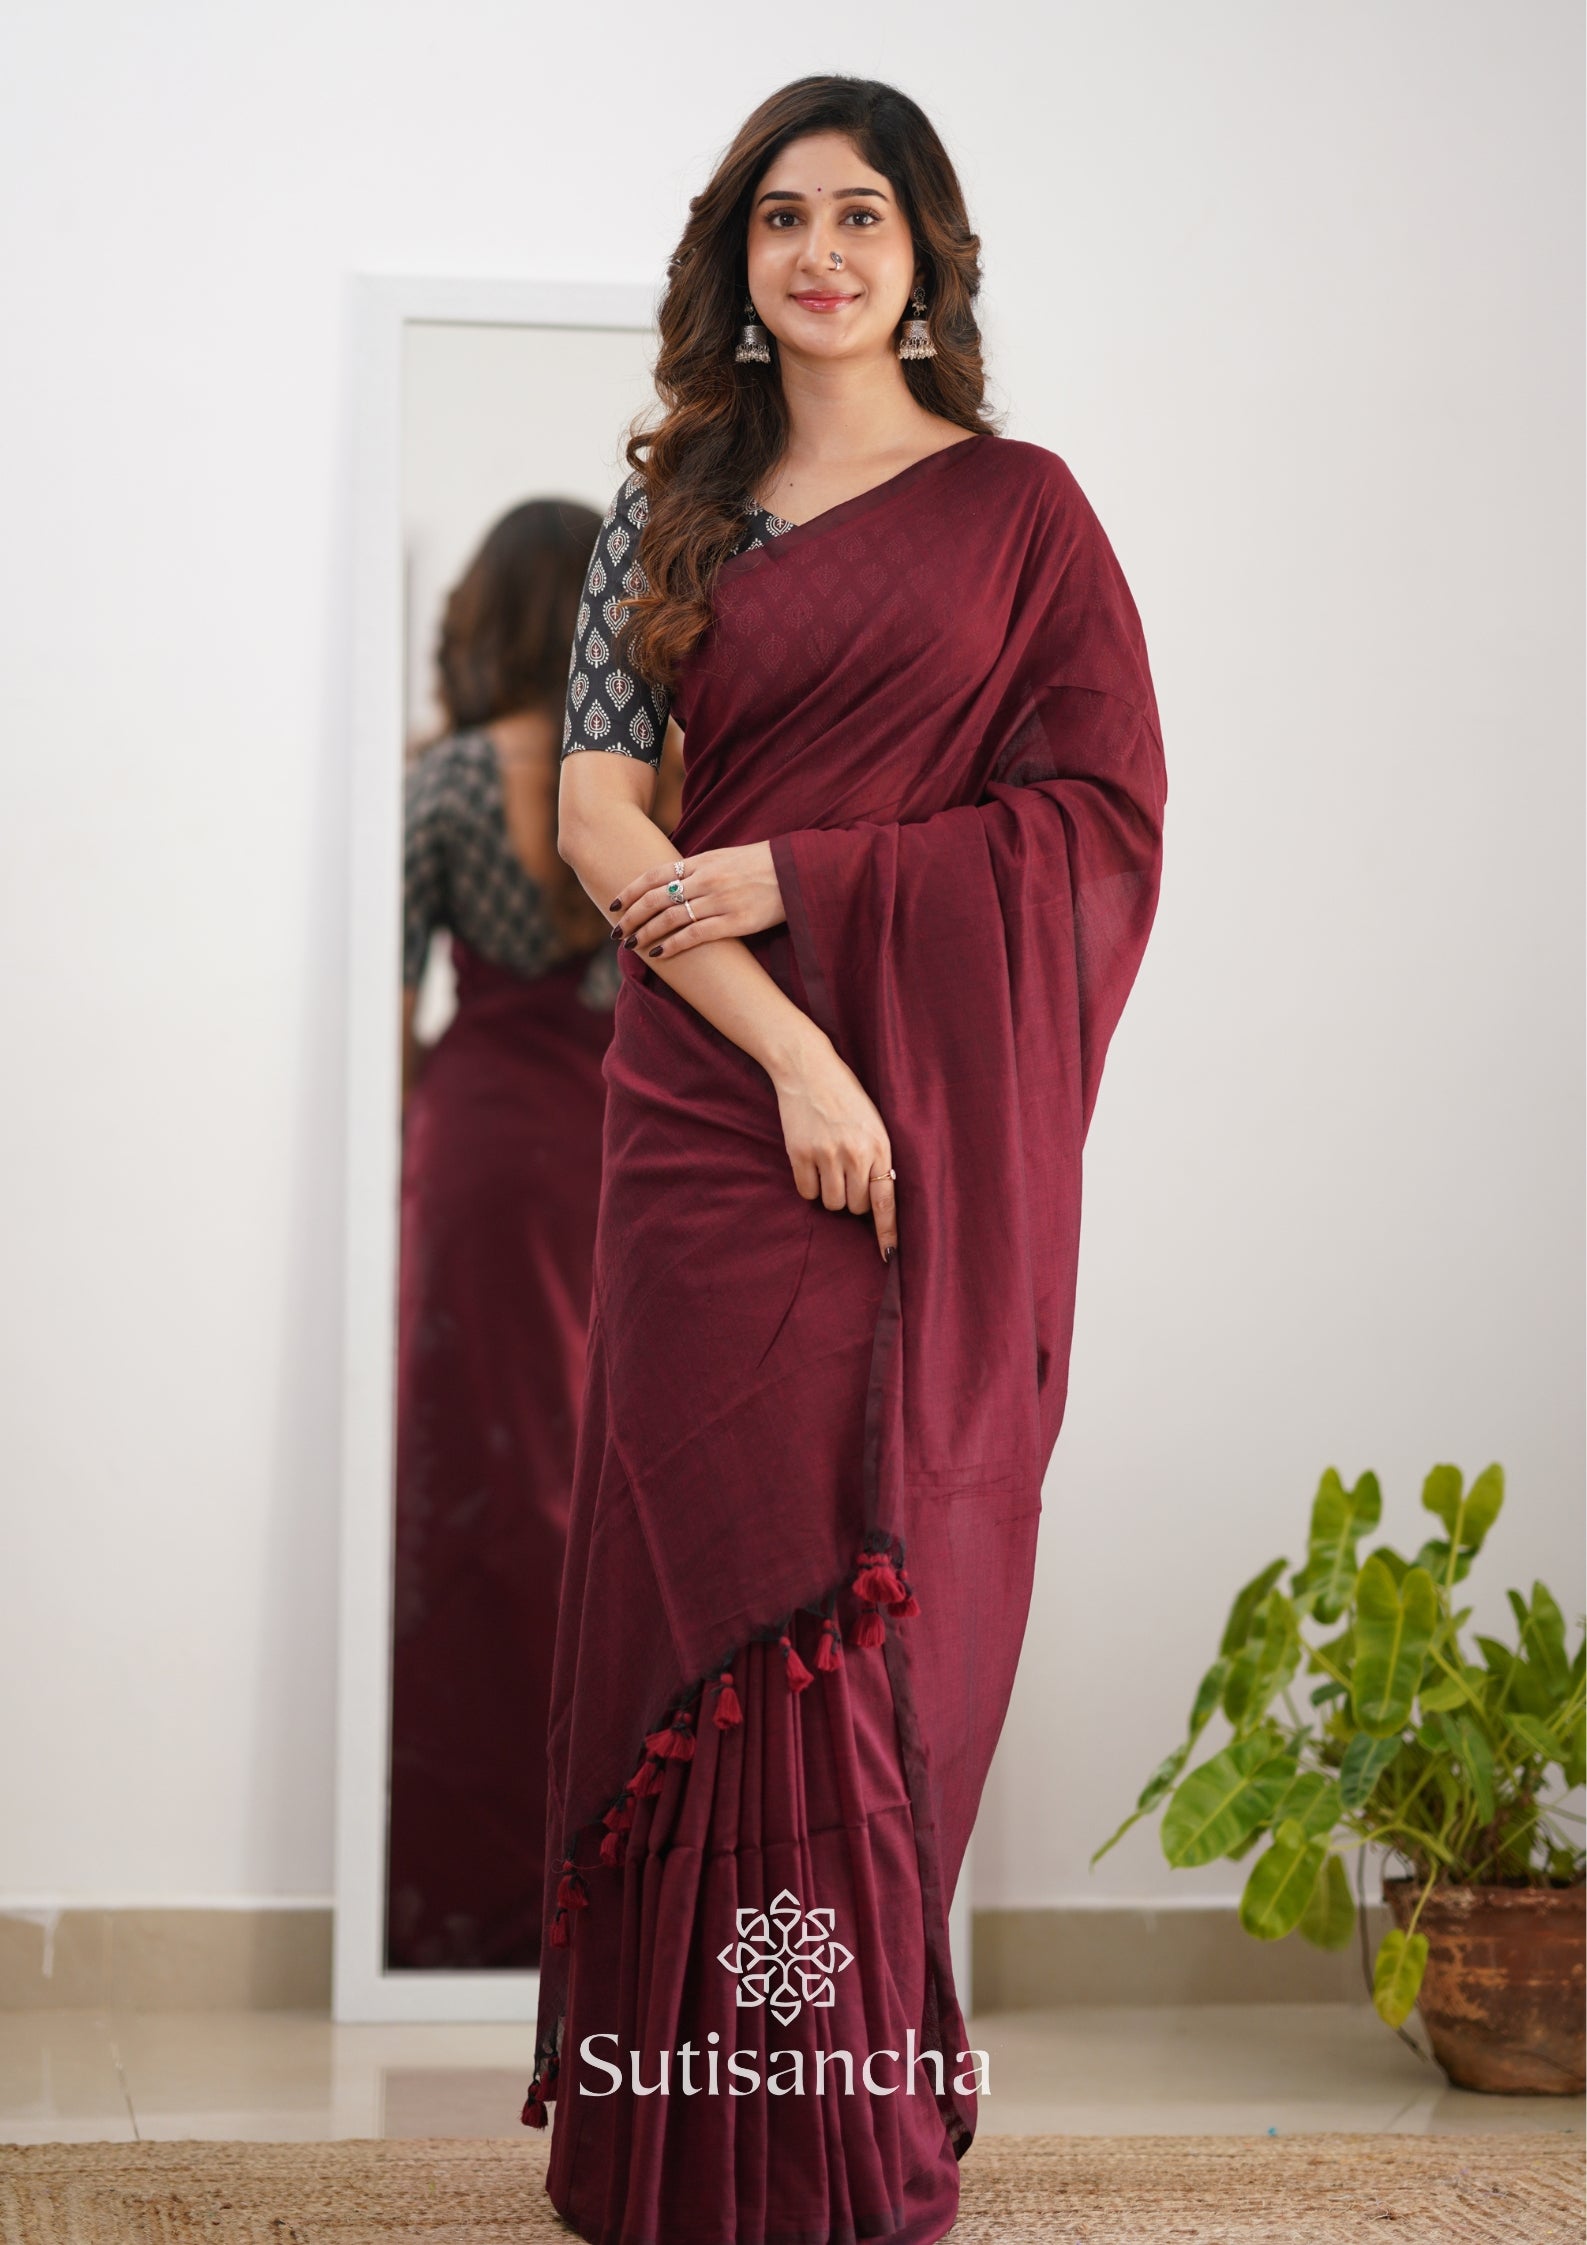 Sutisancha Maroon Handloom Cotton Saree With Designer Blouse